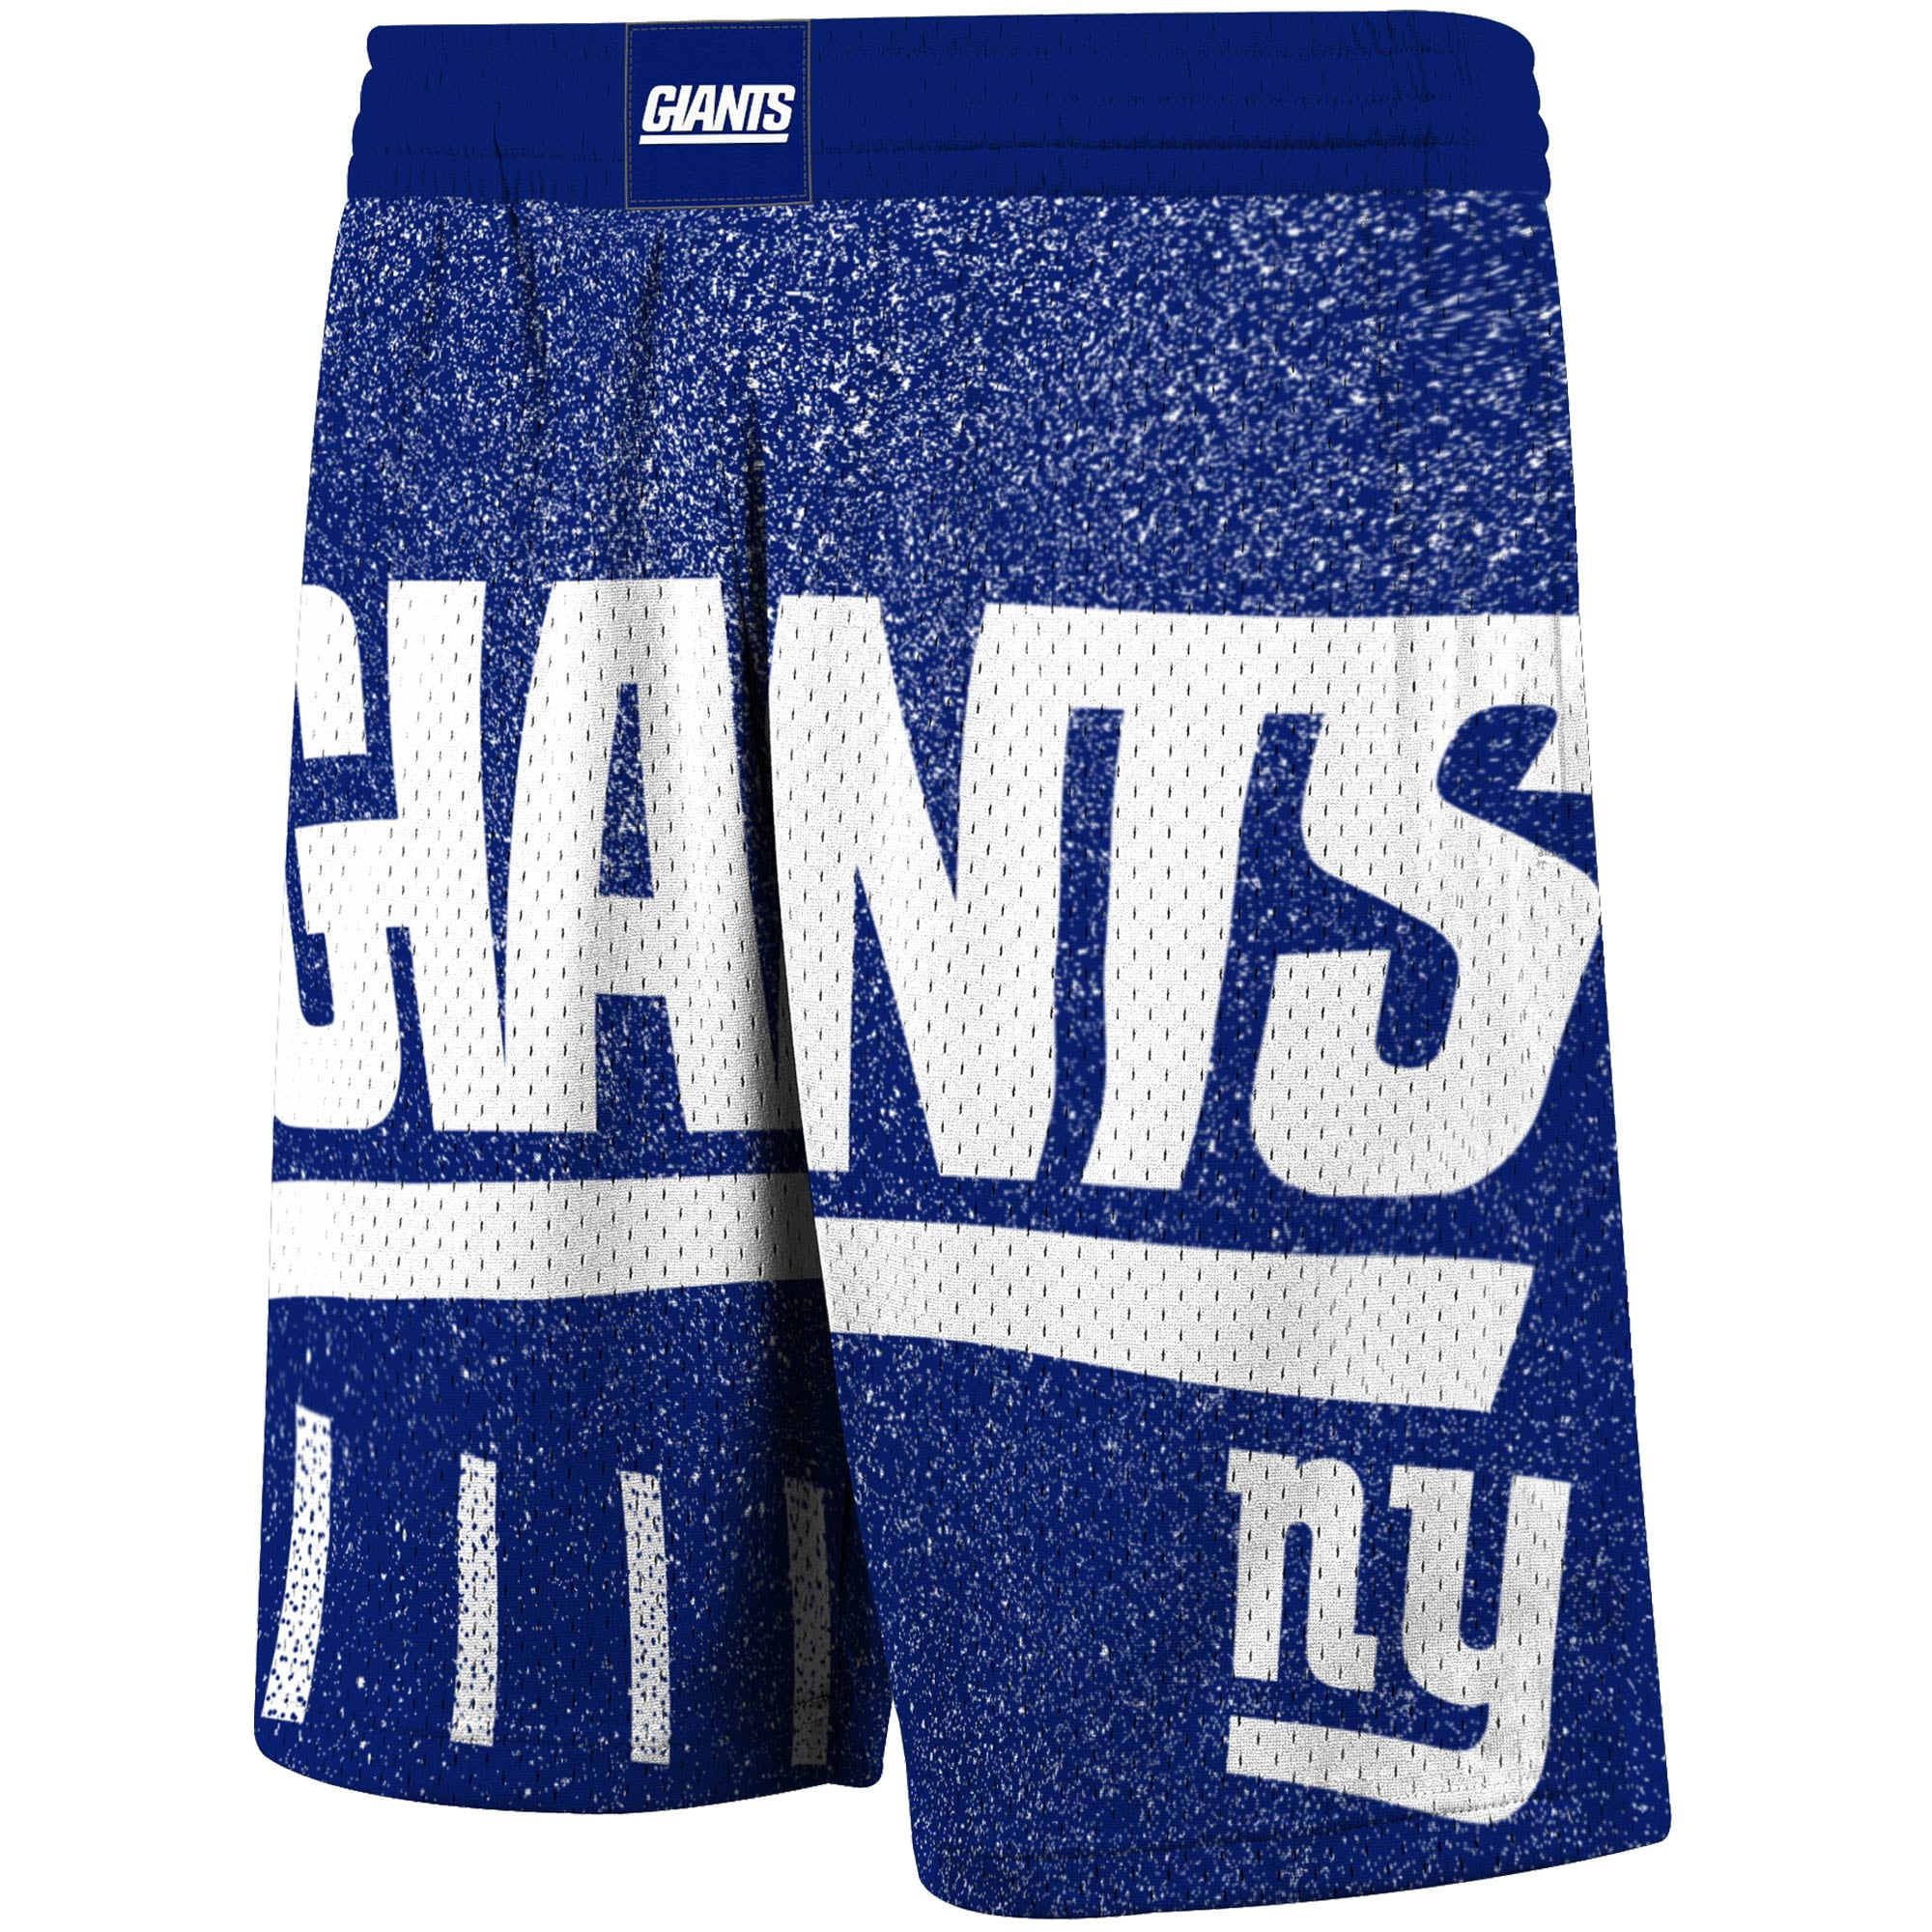 Vintage New York Giants sweatpants